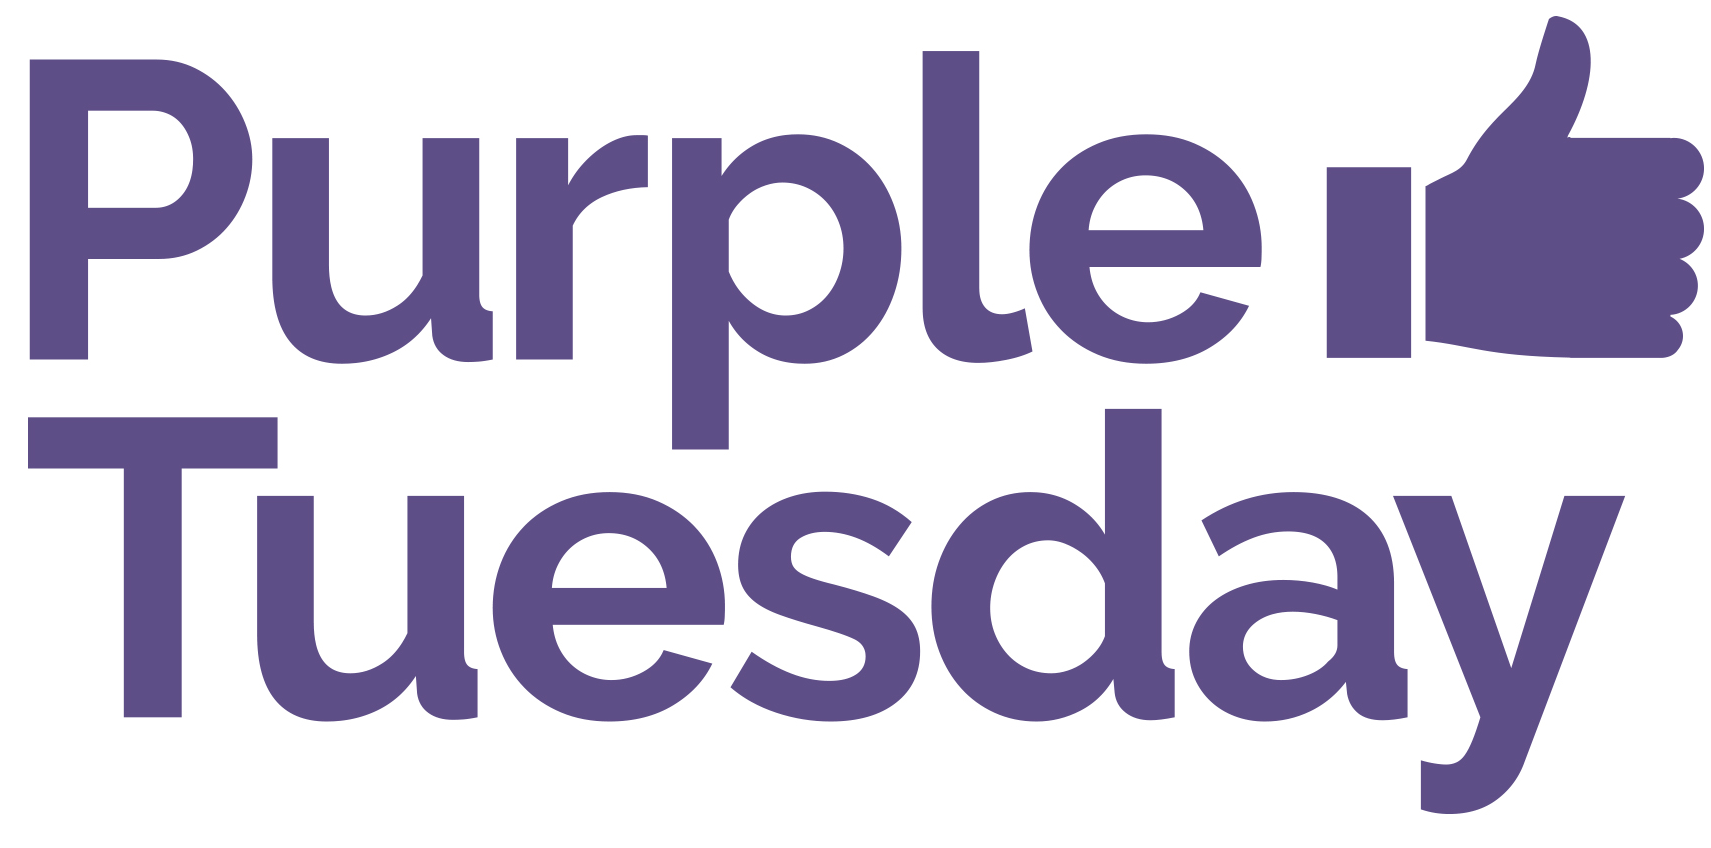 Purple Tuesday